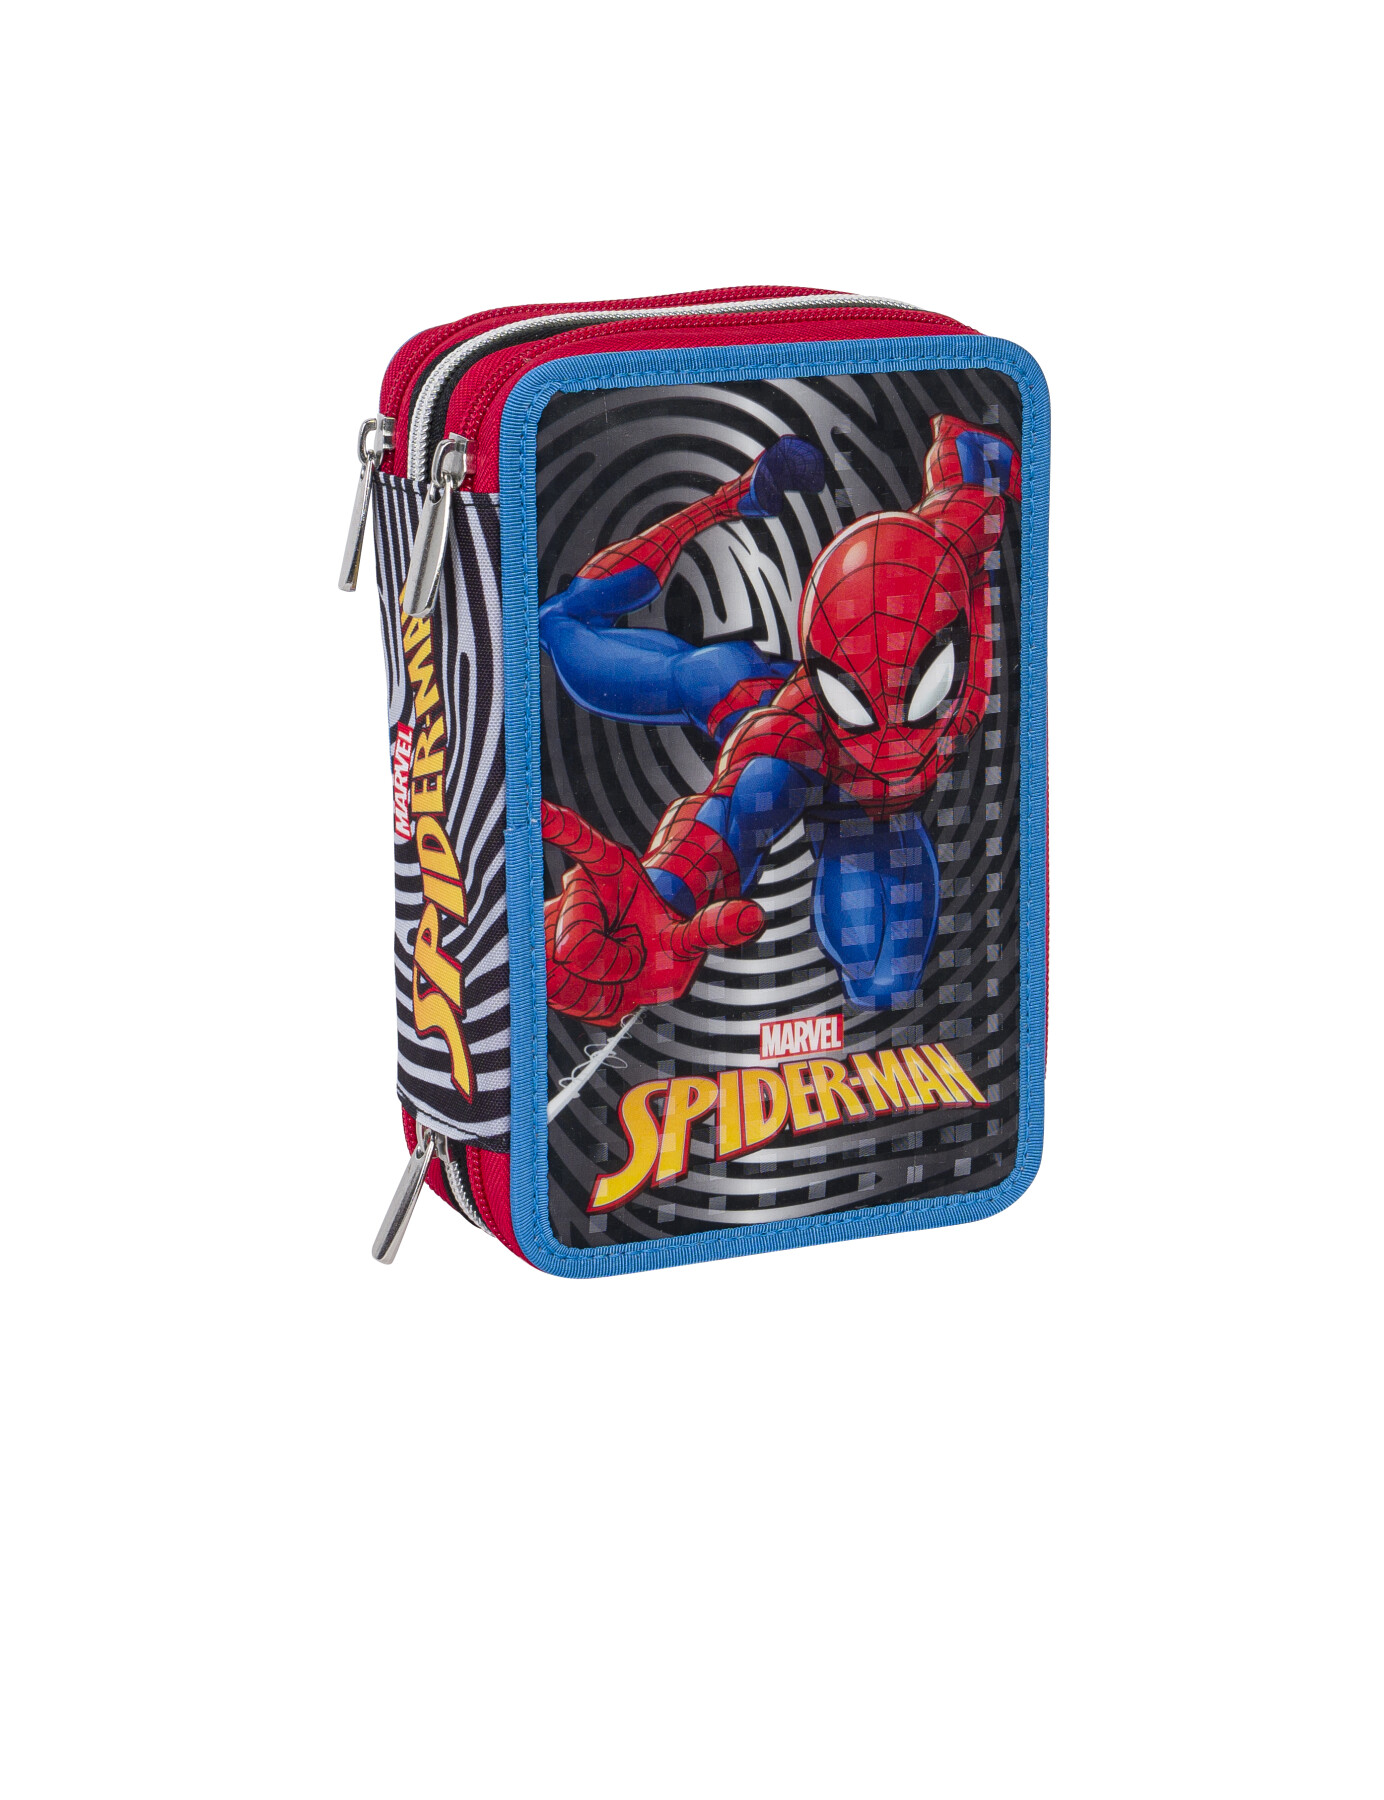 Astuccio 3zip Spiderman - Solletico Giocattoli